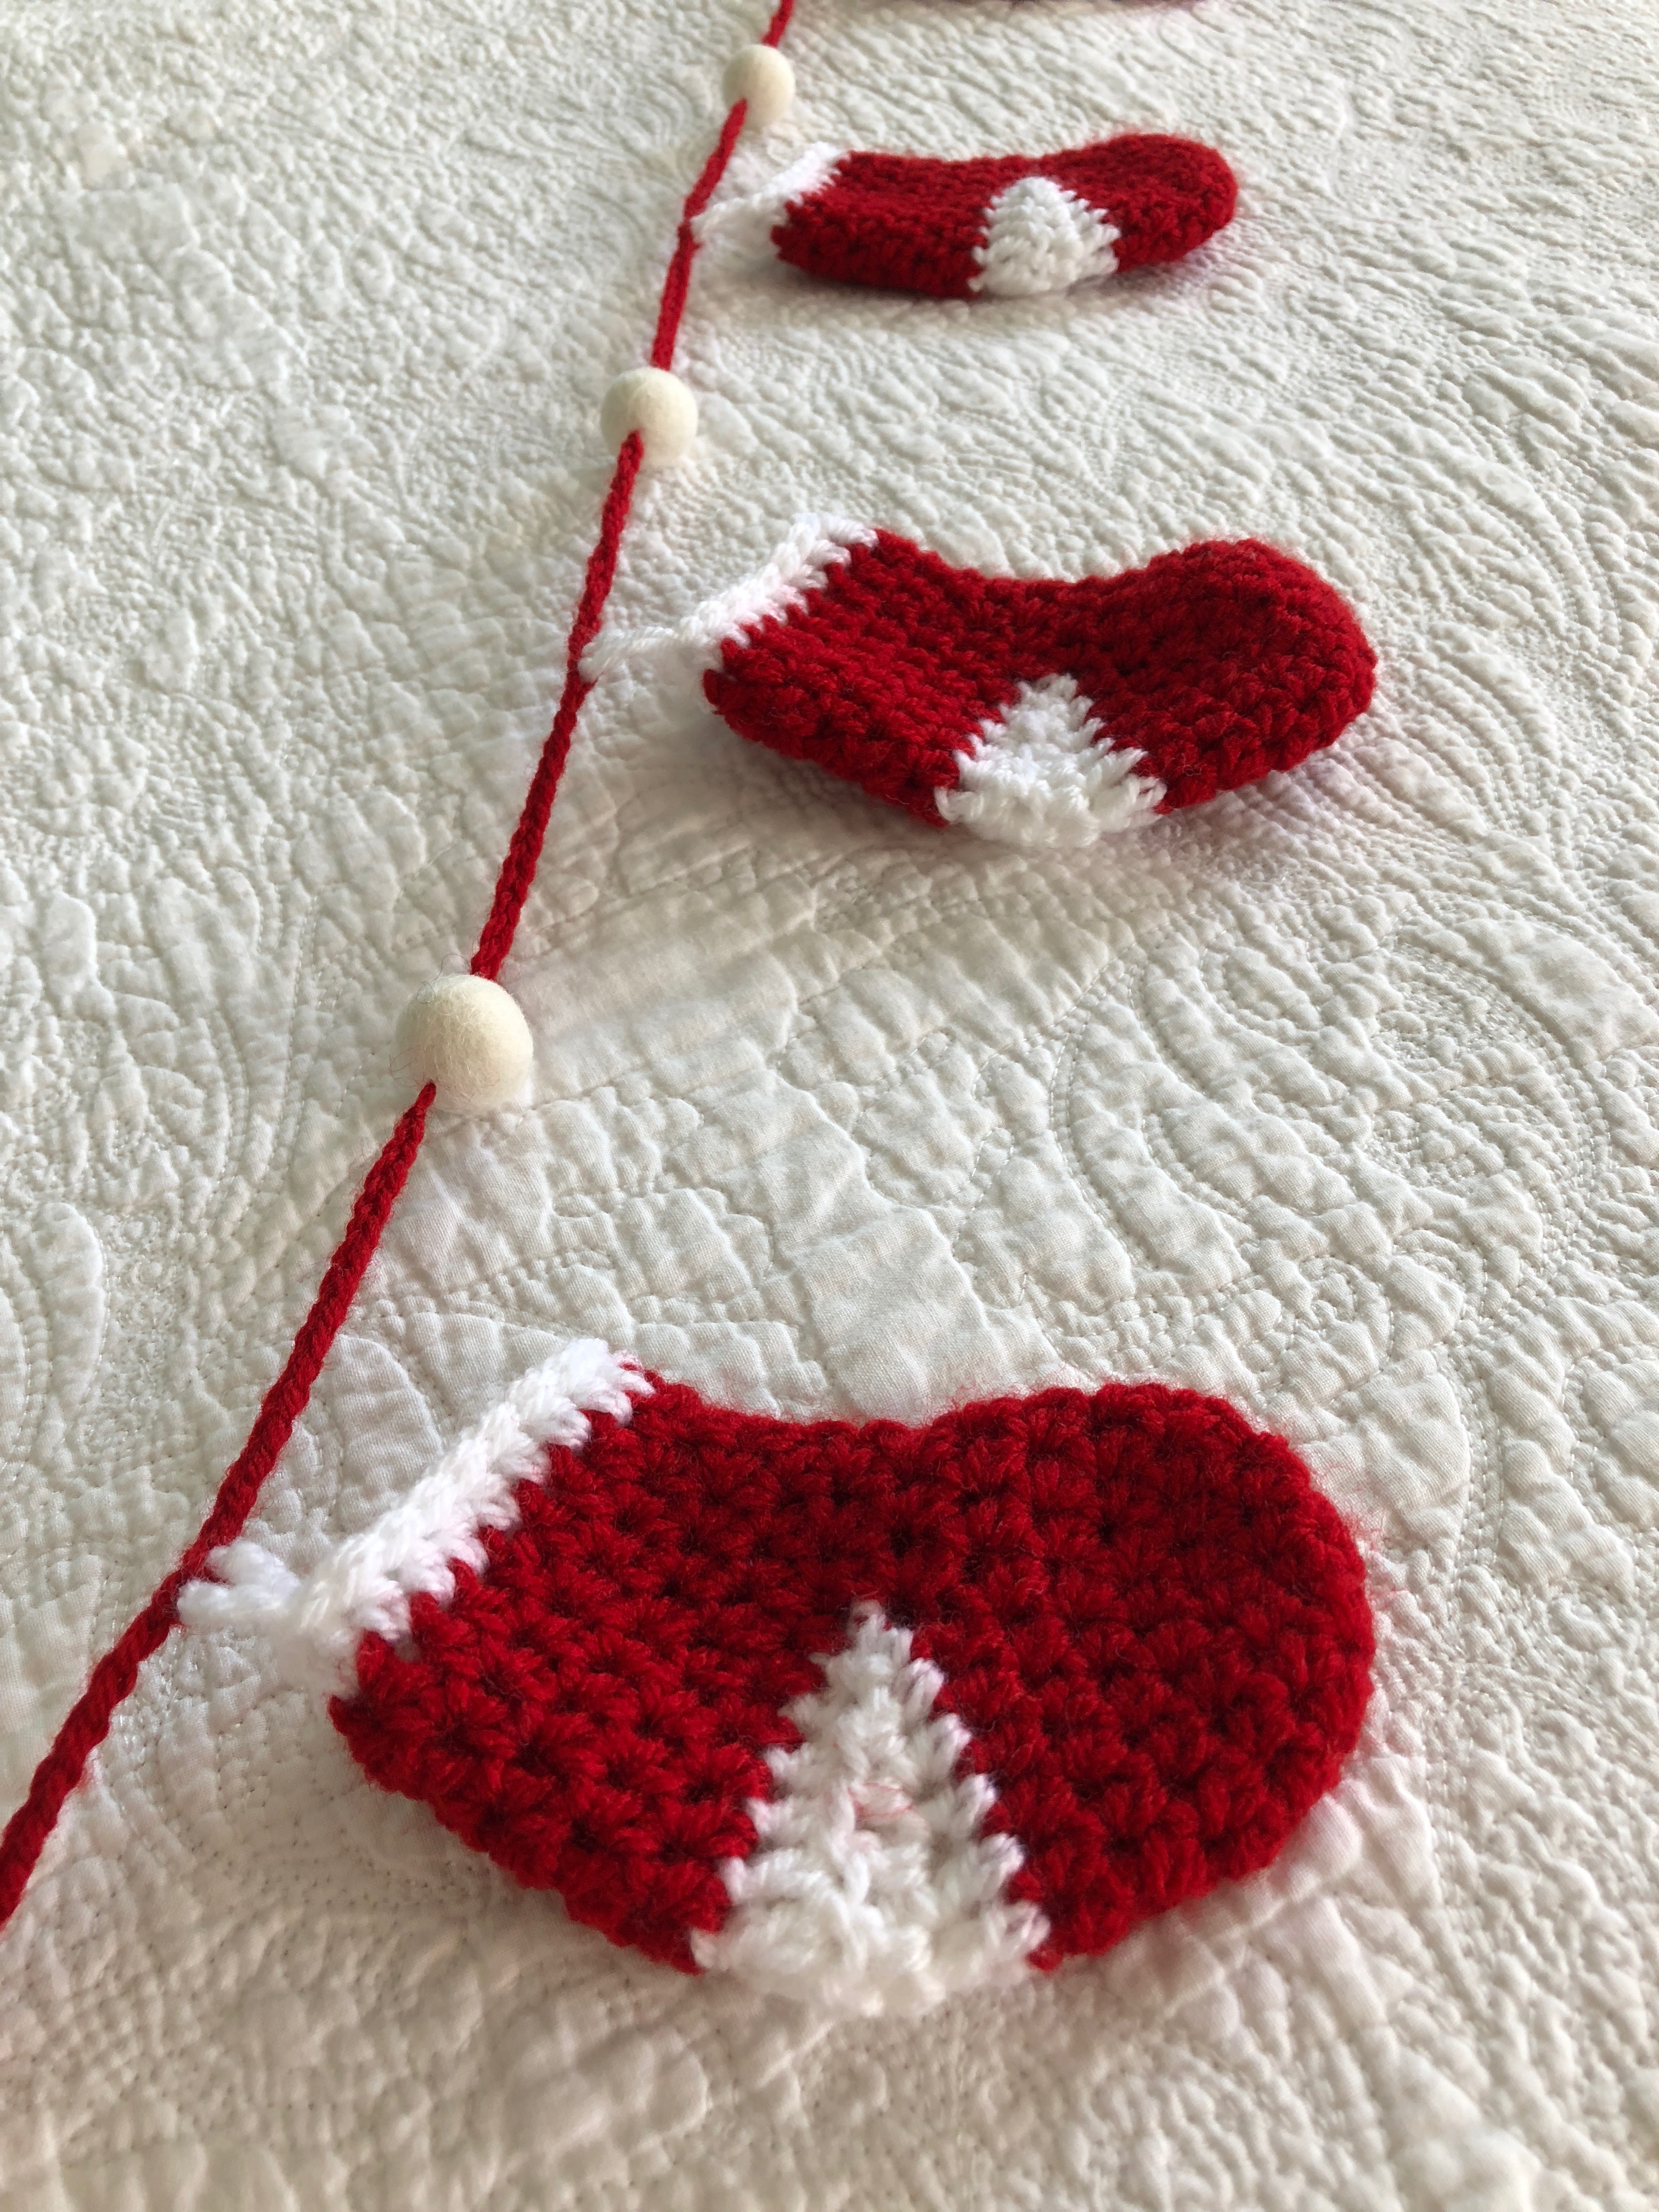 Handmade, crocheted, red and white stockings and white felt pom-pom garland.